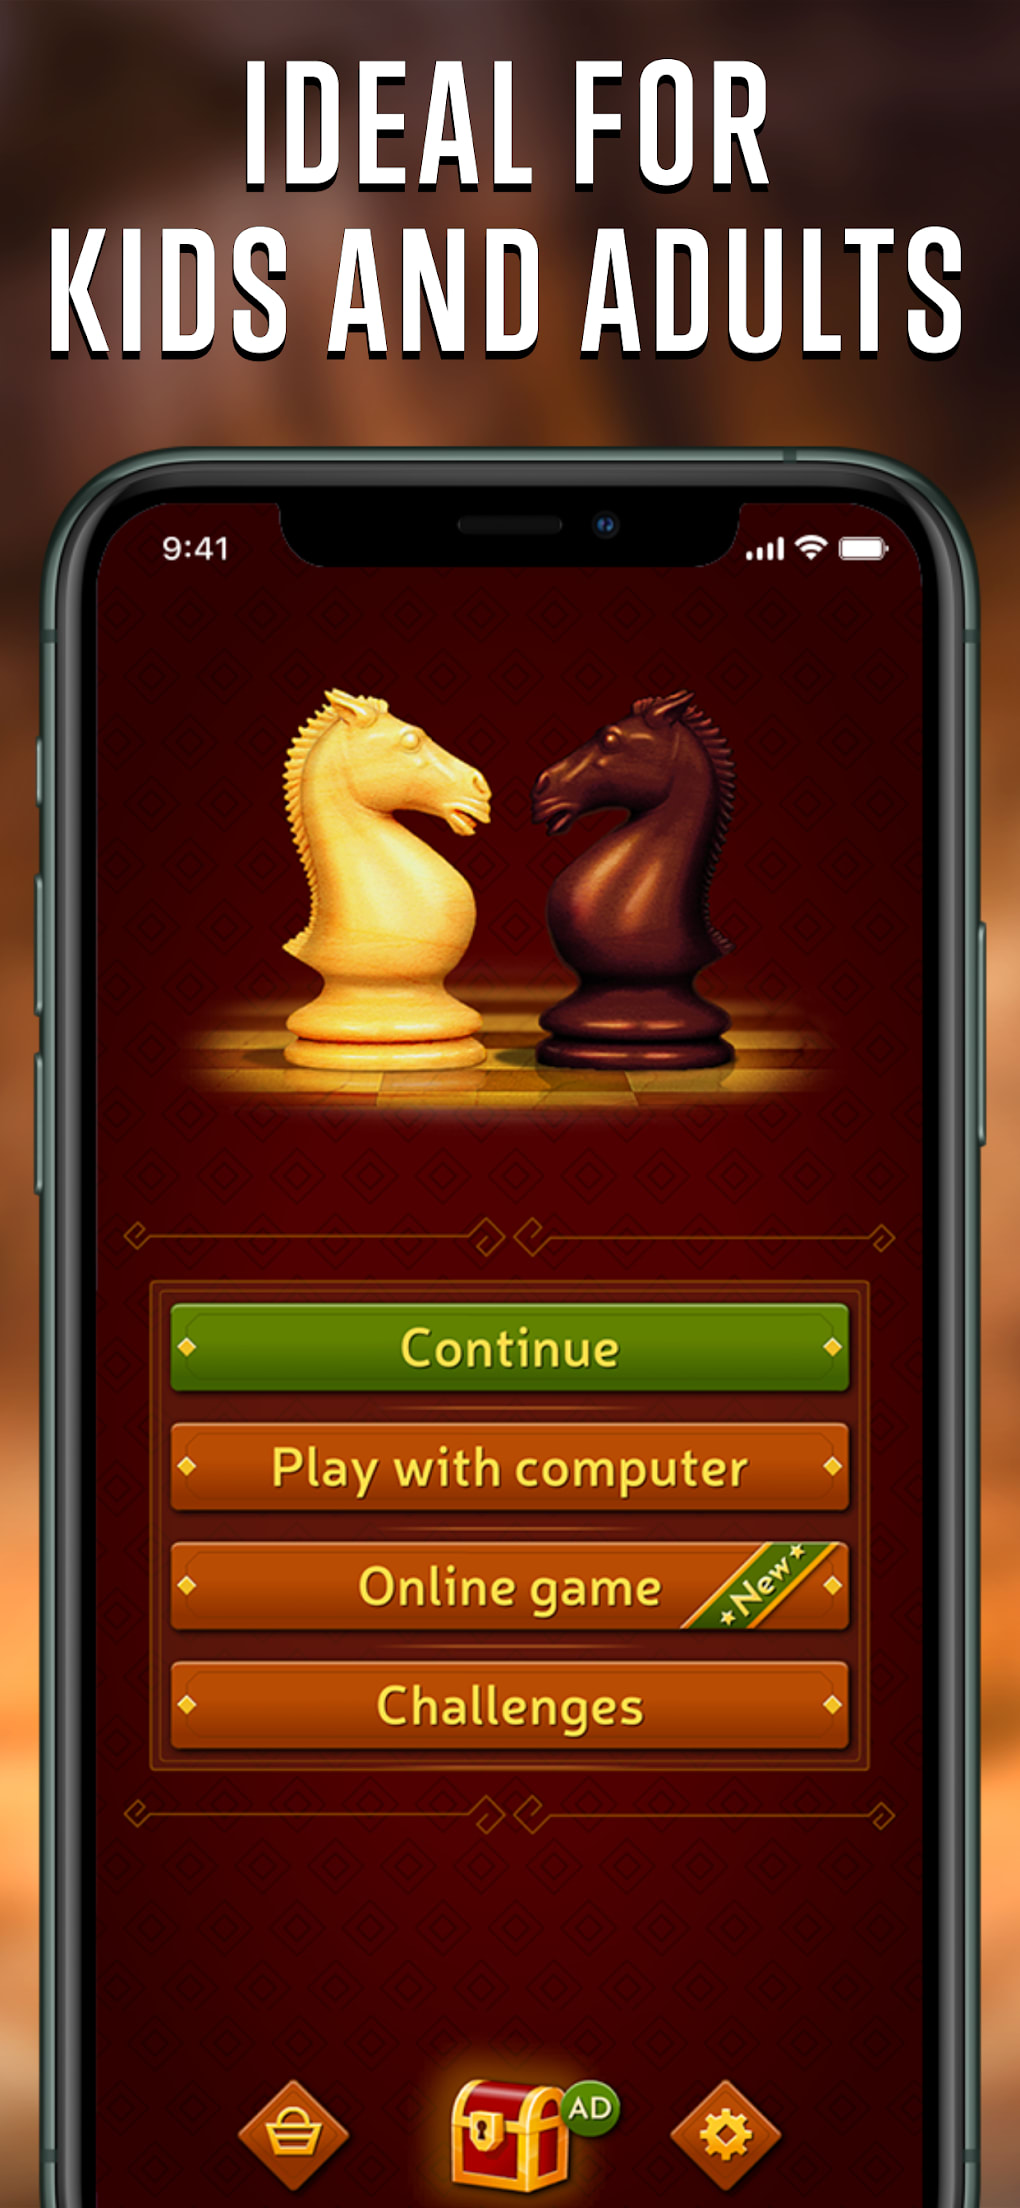 Chess Online - Clash of Kings - APK datoteka Preuzmite za Android